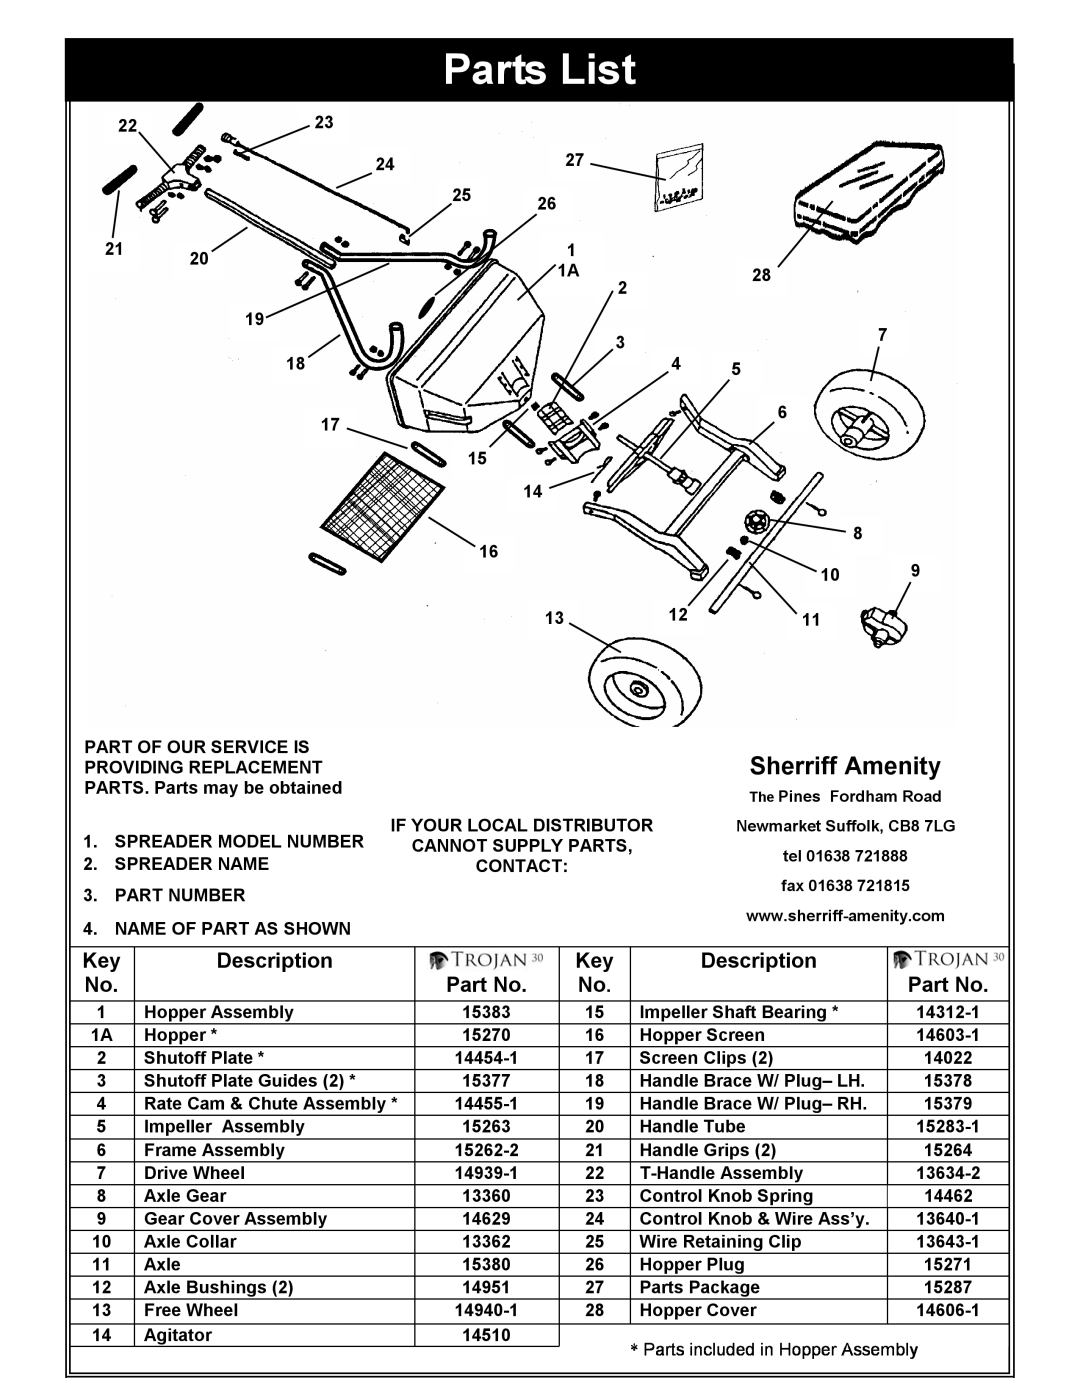 Trojan 30 owner manual Parts List, Sherriff Amenity 